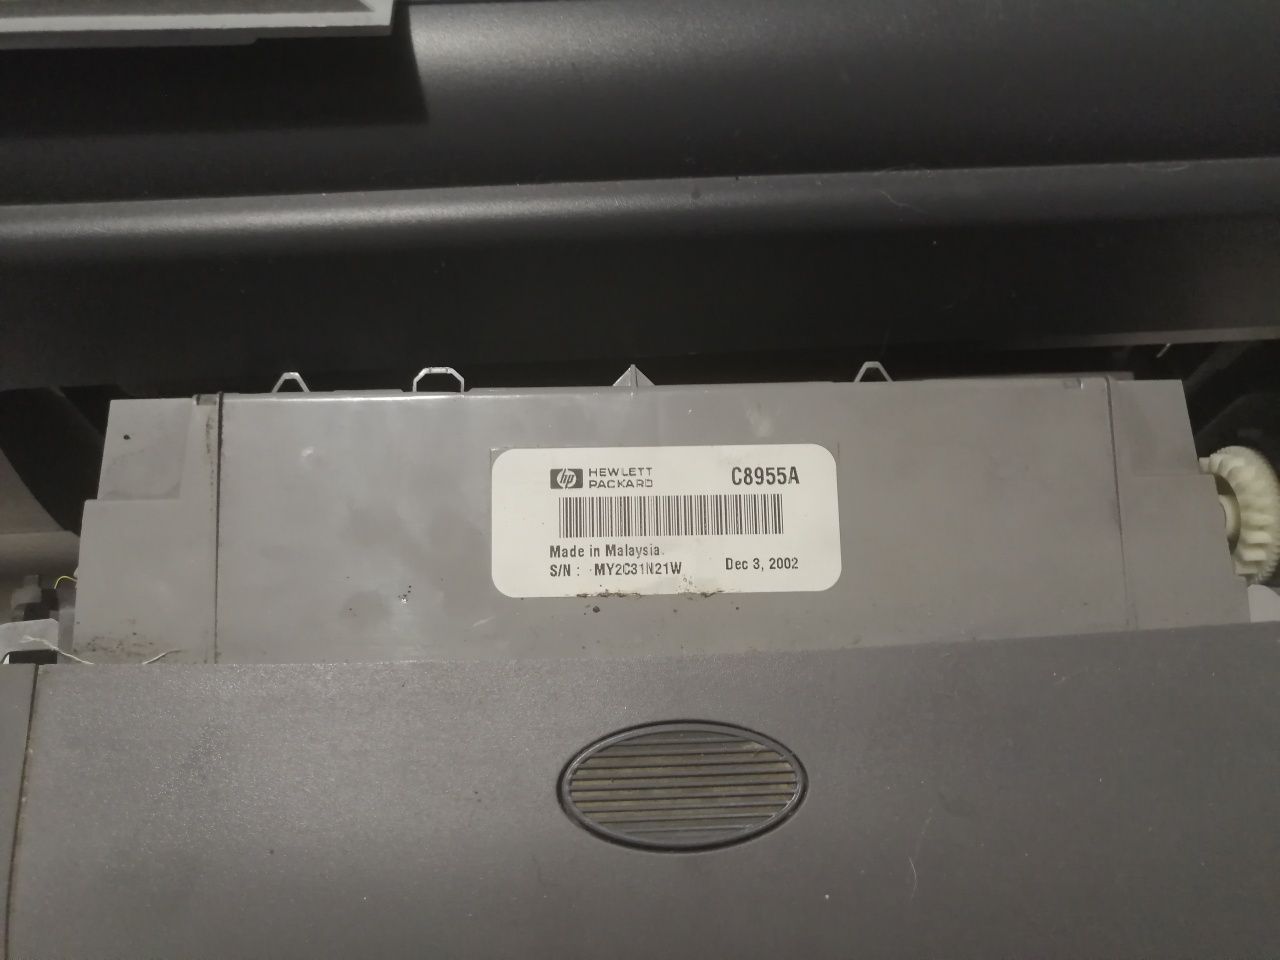 Струменевий фотопринтер HP Photosmart 7660+модуль двустороннього друку